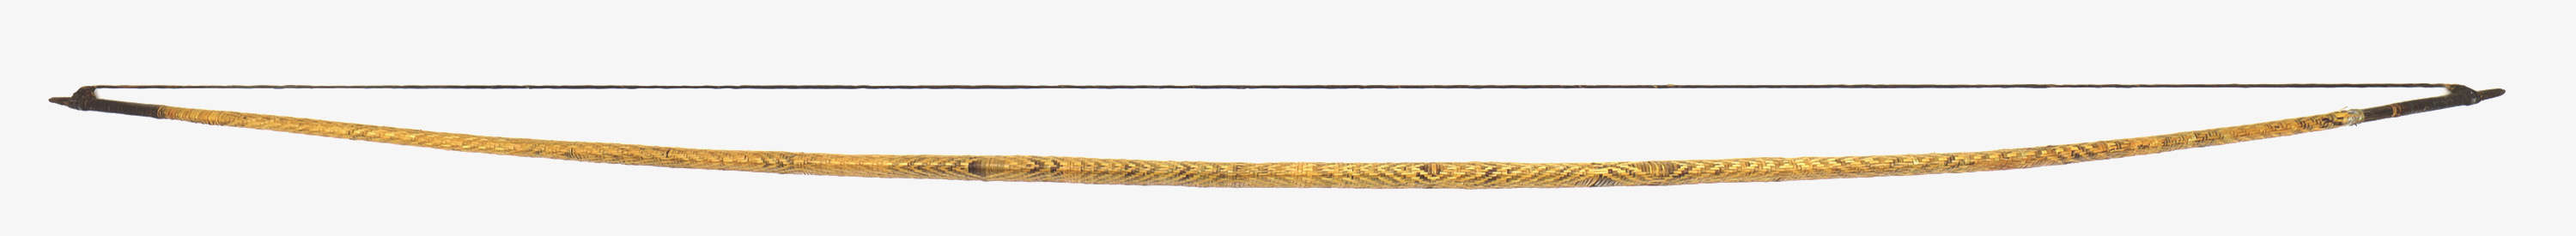 Solomon islands plaited bow